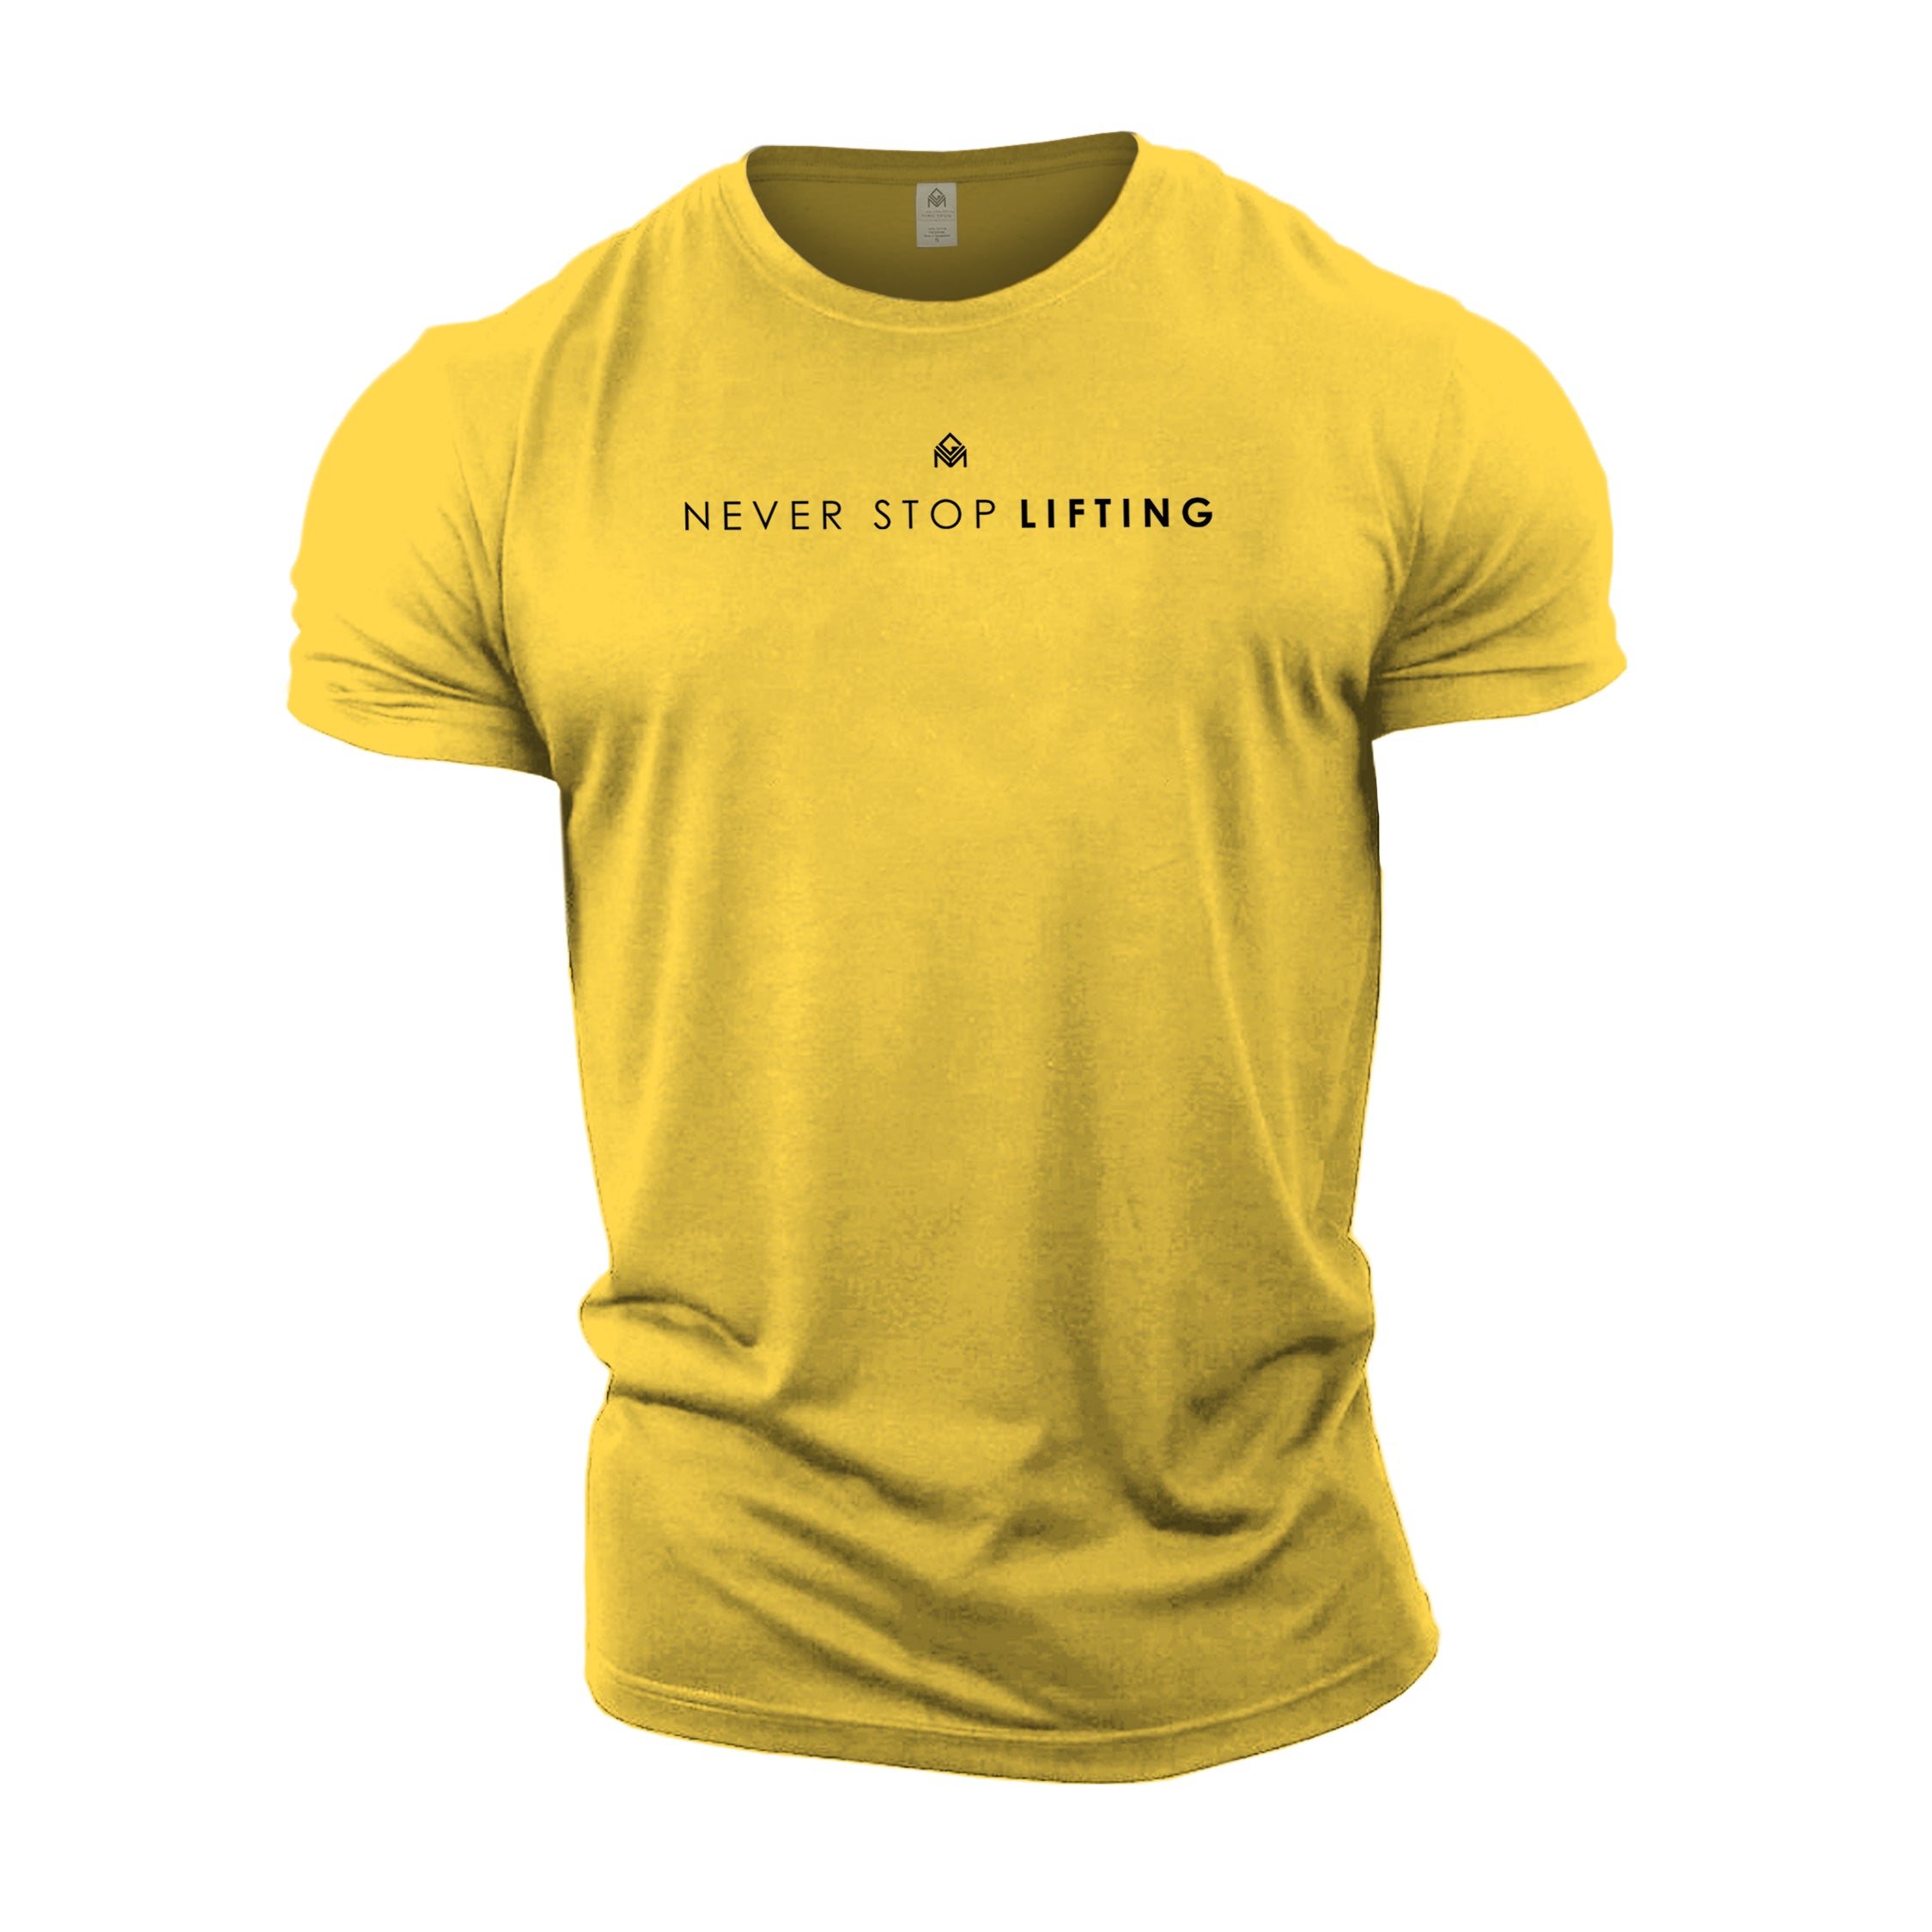 Never Stop Lifting - Gym T-Shirt